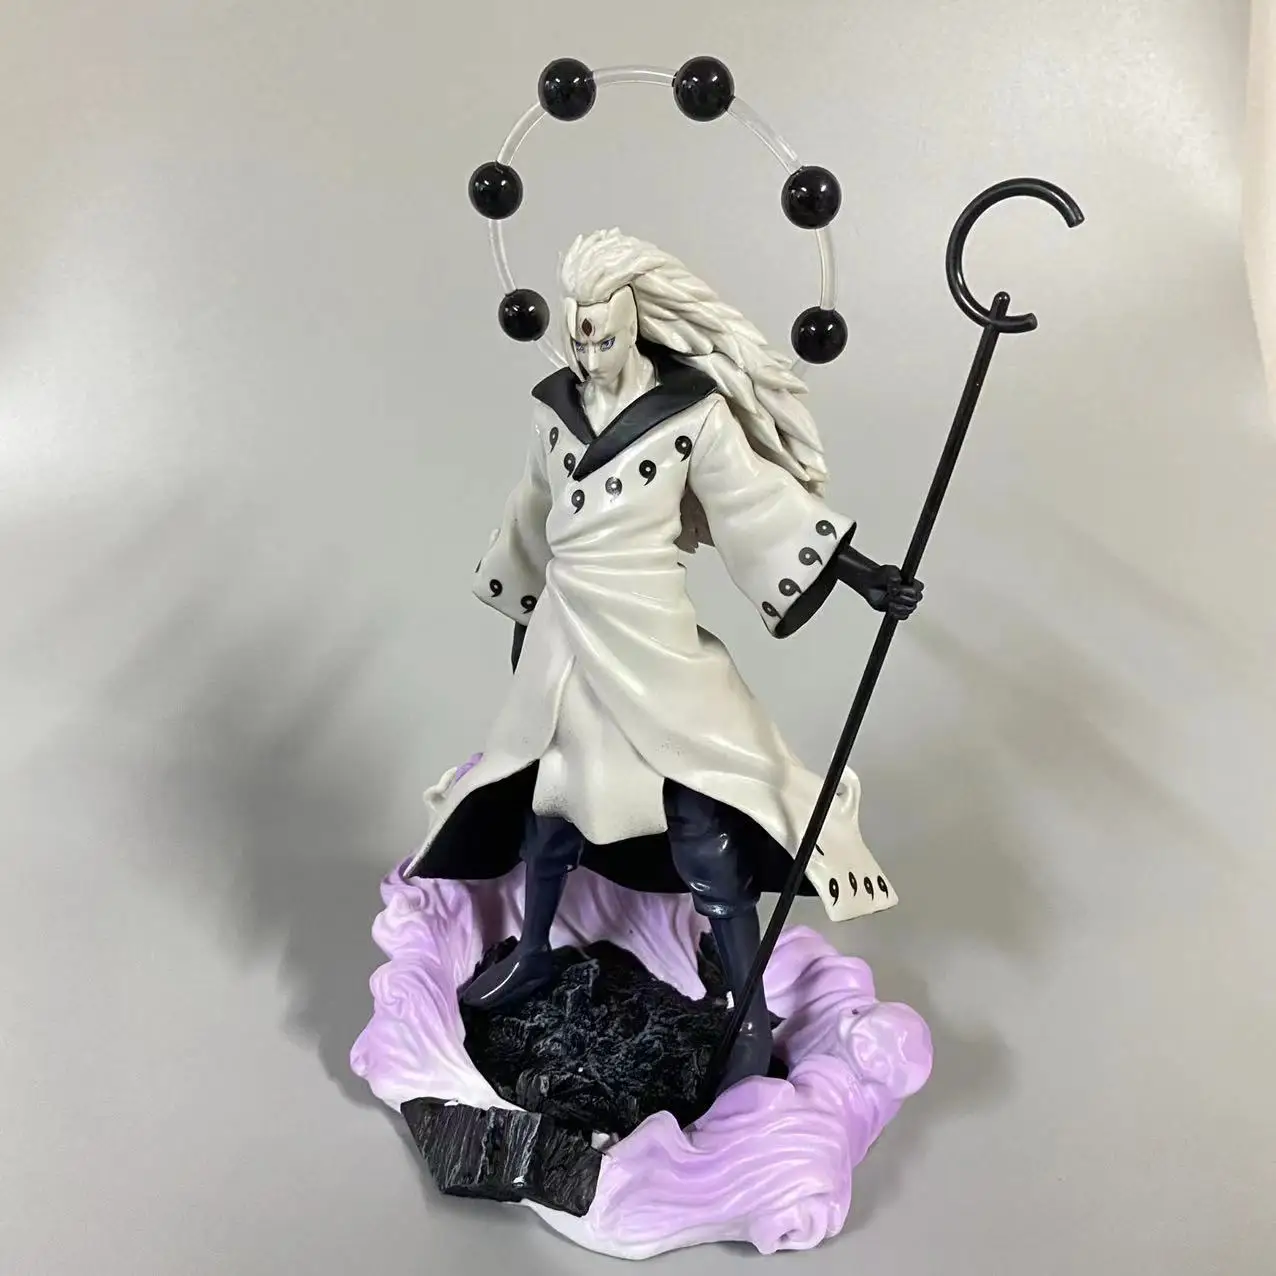 Uchiha Madara Jinchuriki Form Ver. Pvc Figure Toy Collection Model Statue 